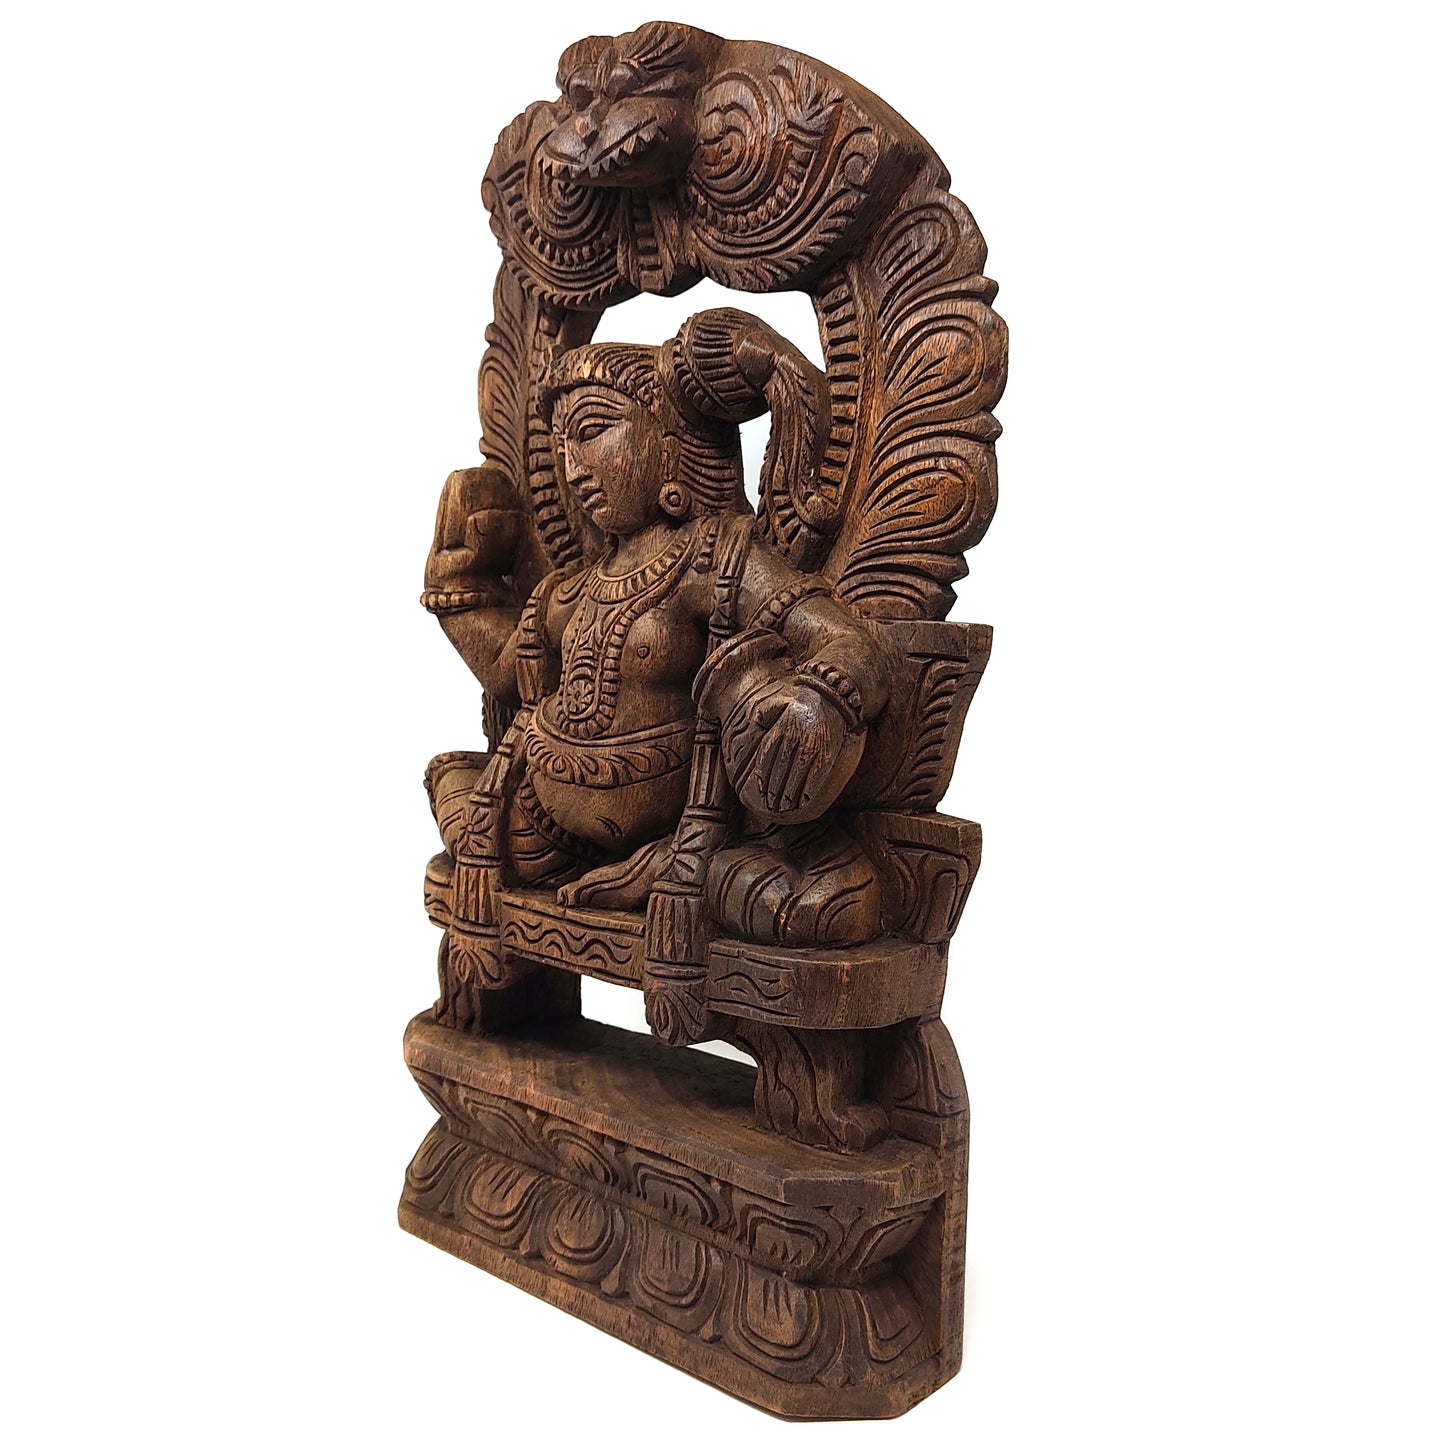 Wooden Bal Krishna Carving | Krishna Wall Hanging Plaque Handmade Carving 18"